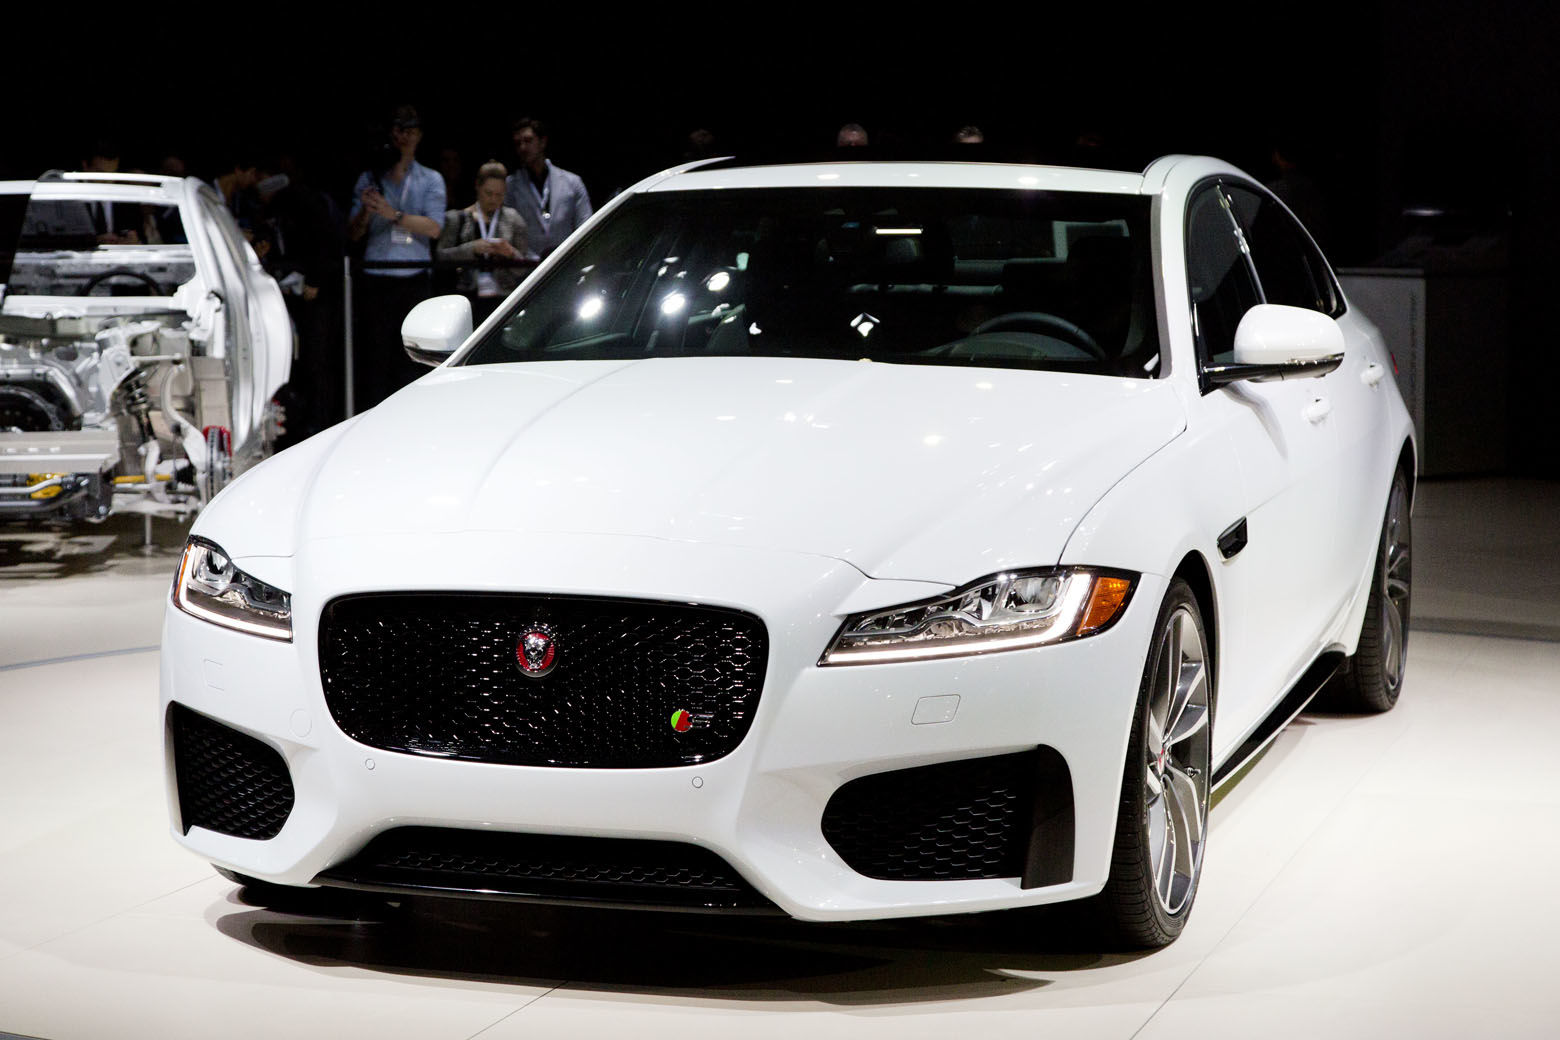 The 2016 Jaguar XF is displayed at the New York International Auto Show, Wednesday, April 1, 2015. (AP Photo/Mark Lennihan)